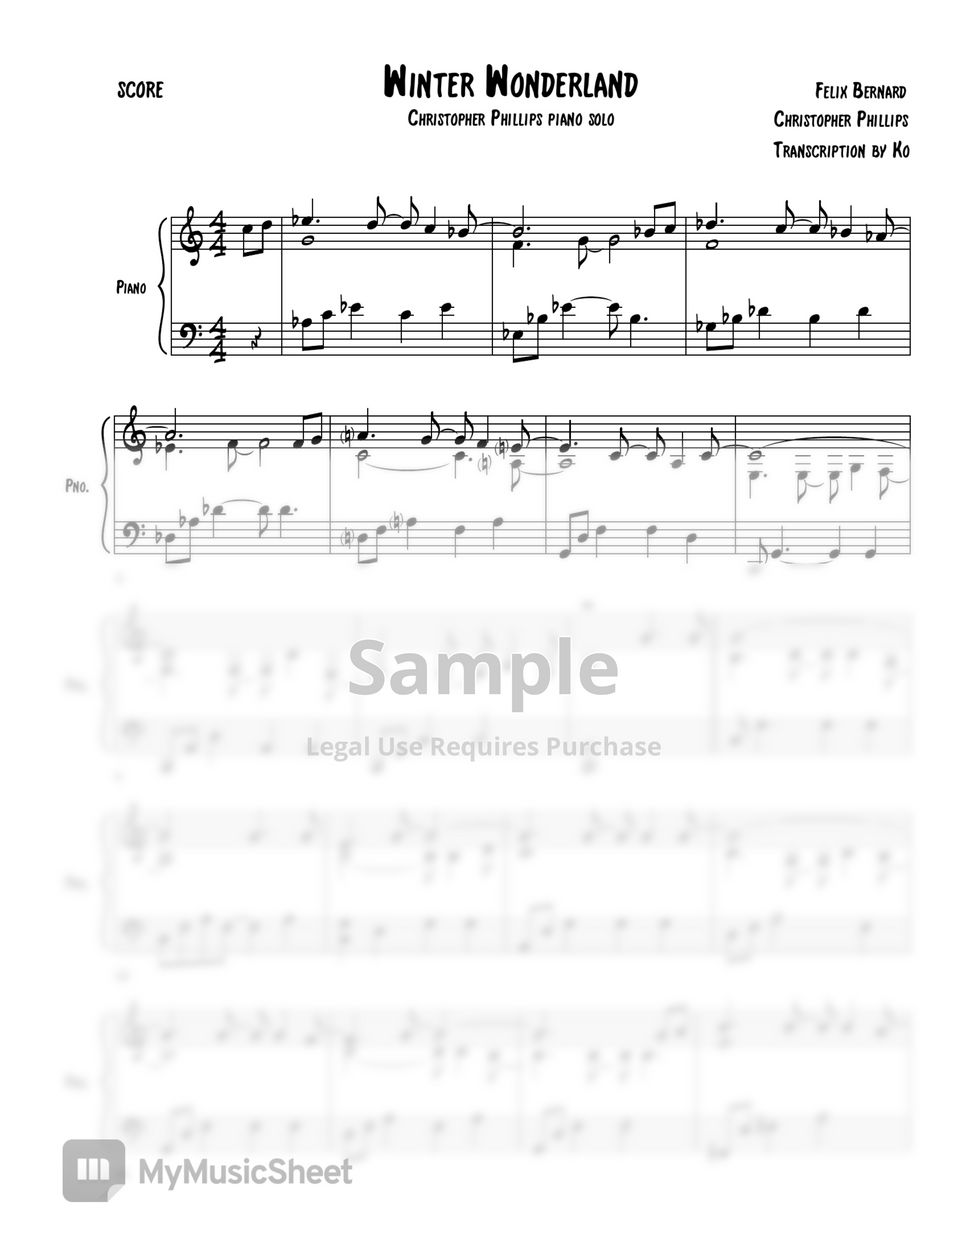 Felix Bernard - Winter Wonderland (Christopher Phillips / Jazz / Jazz piano / transcription / ピアノ / ジャズピアノ) by Ko